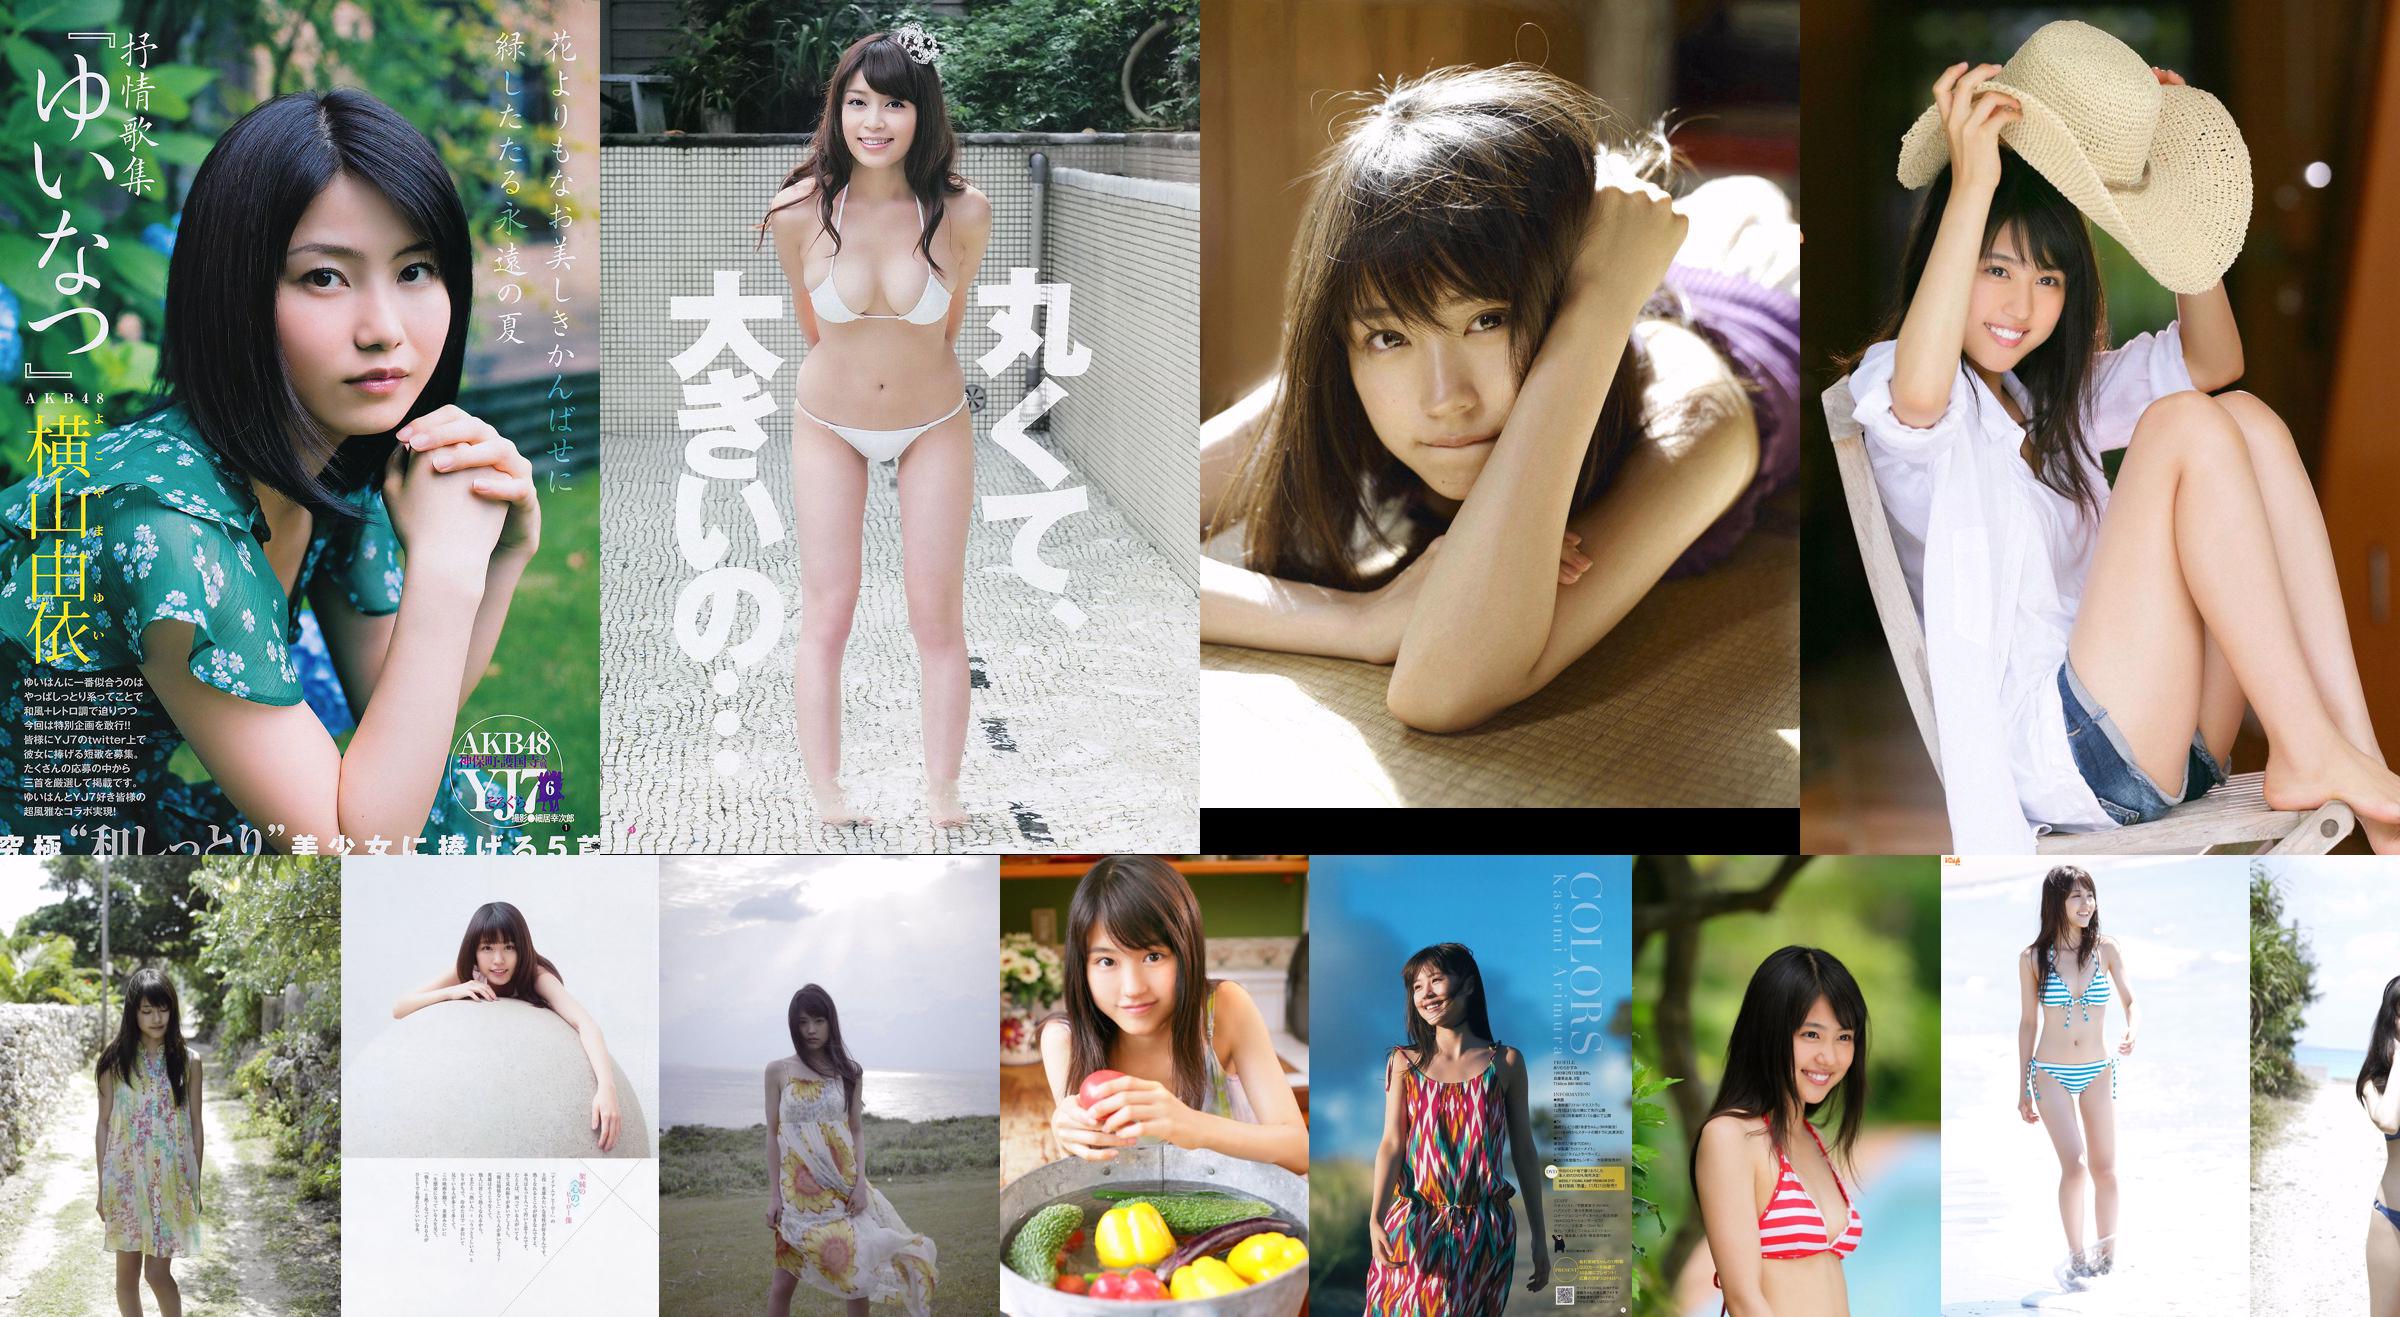 Kasumi Arimura "WPB 2012" No.df1d8b Page 22